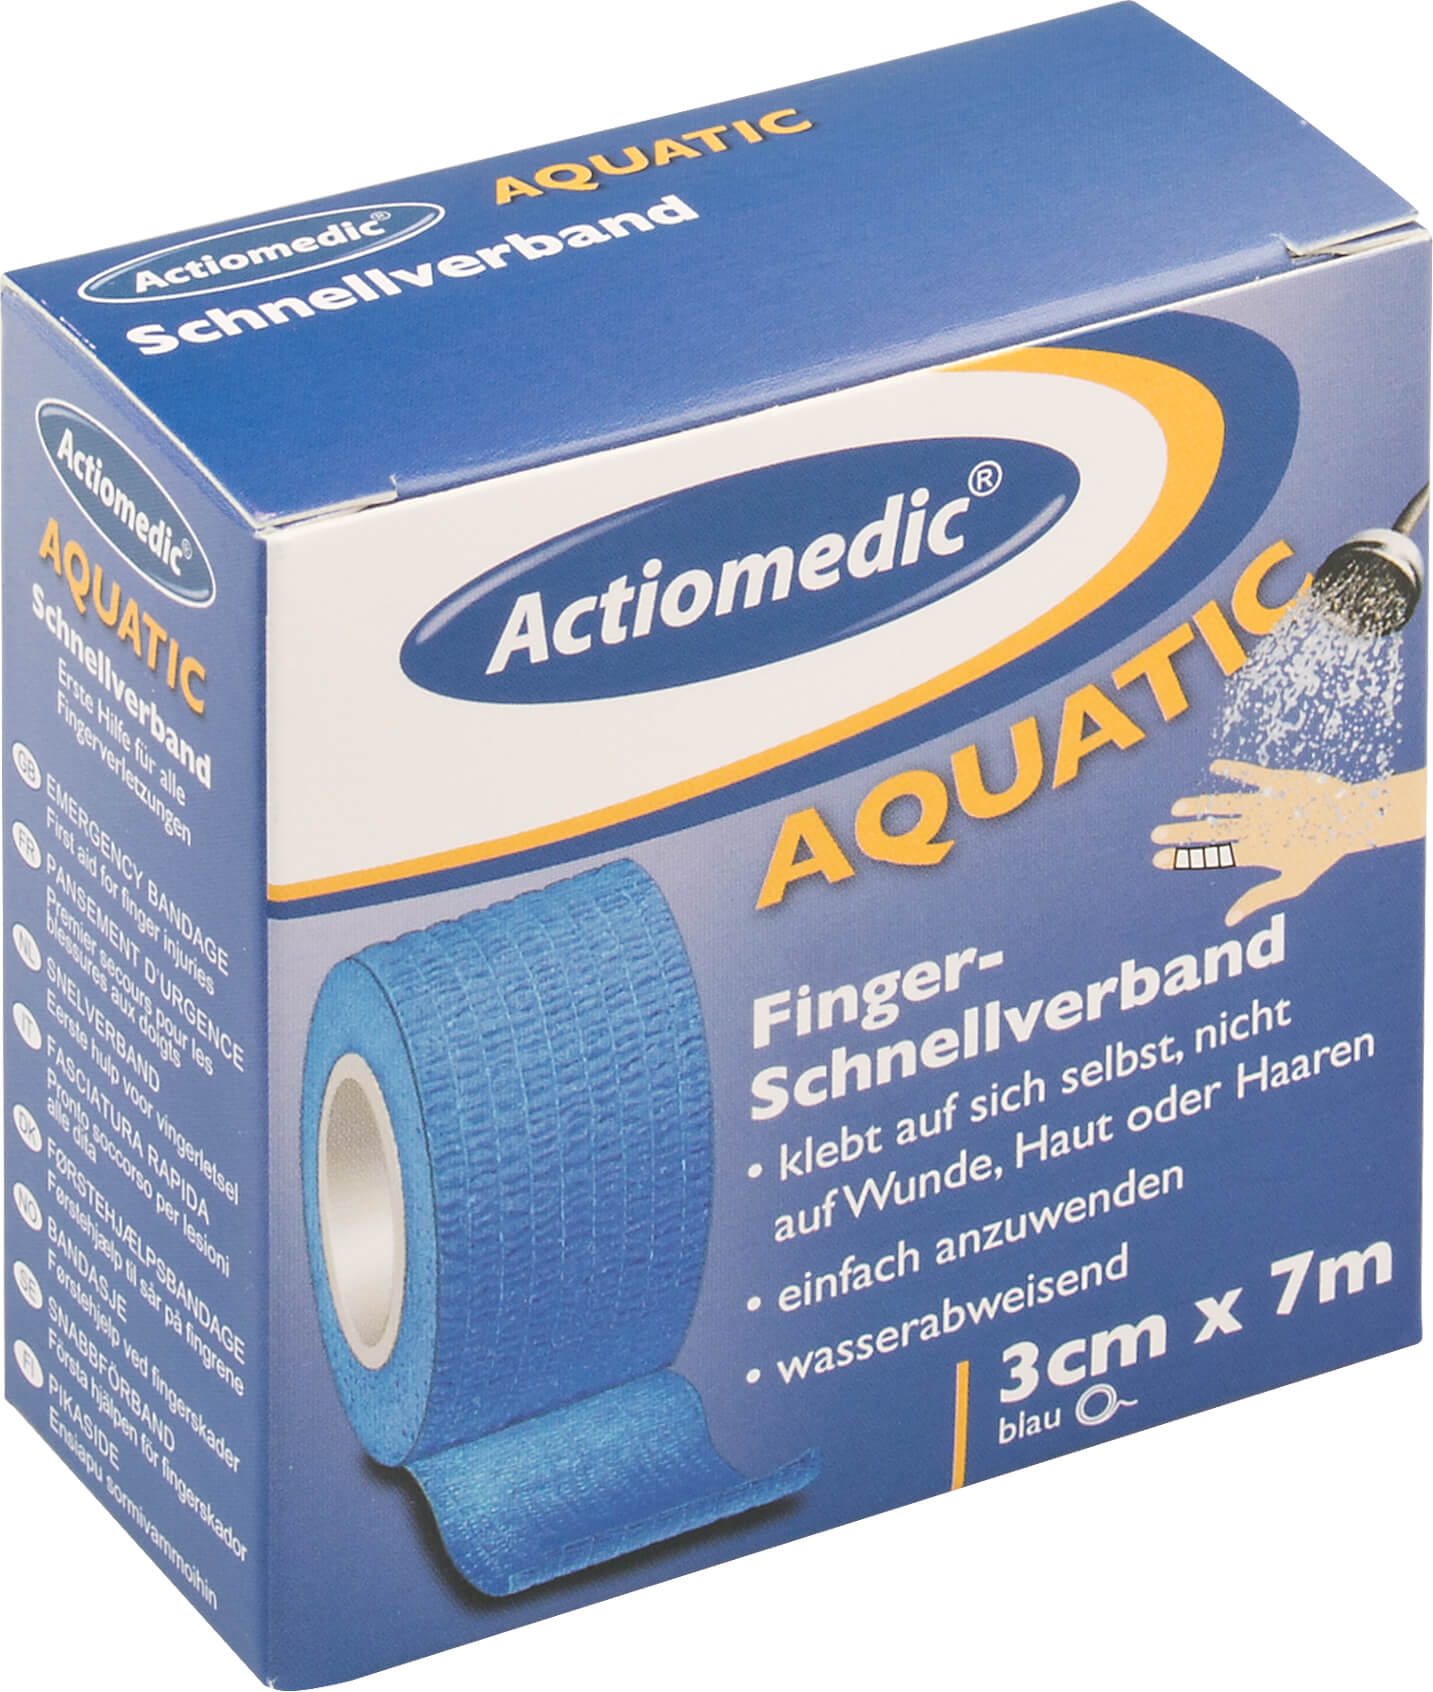 Emergency Bandage Aquatic, blue, Actiomedic - 3cm x 7m